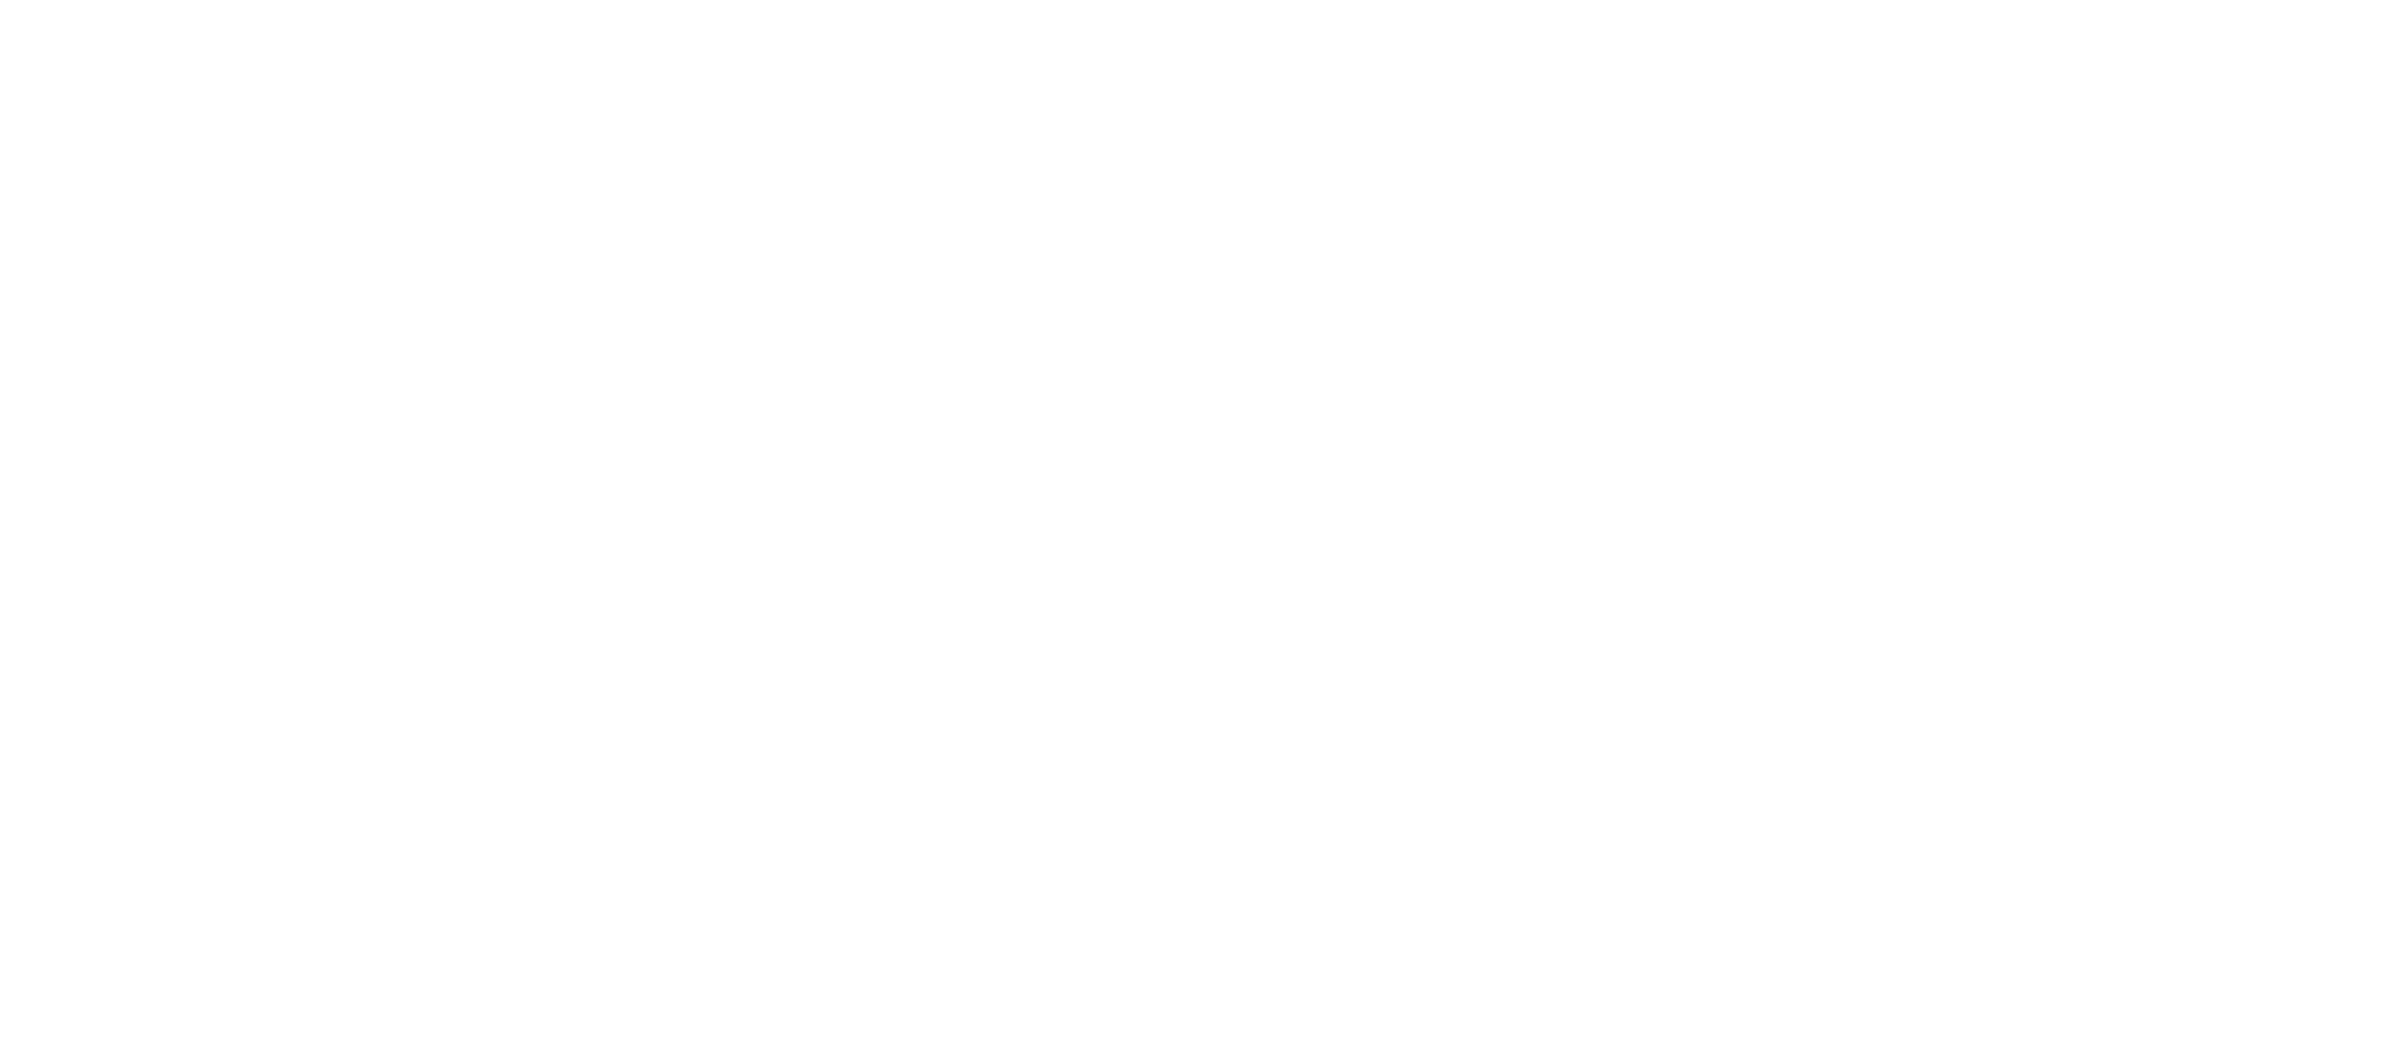 Nathan Gurd